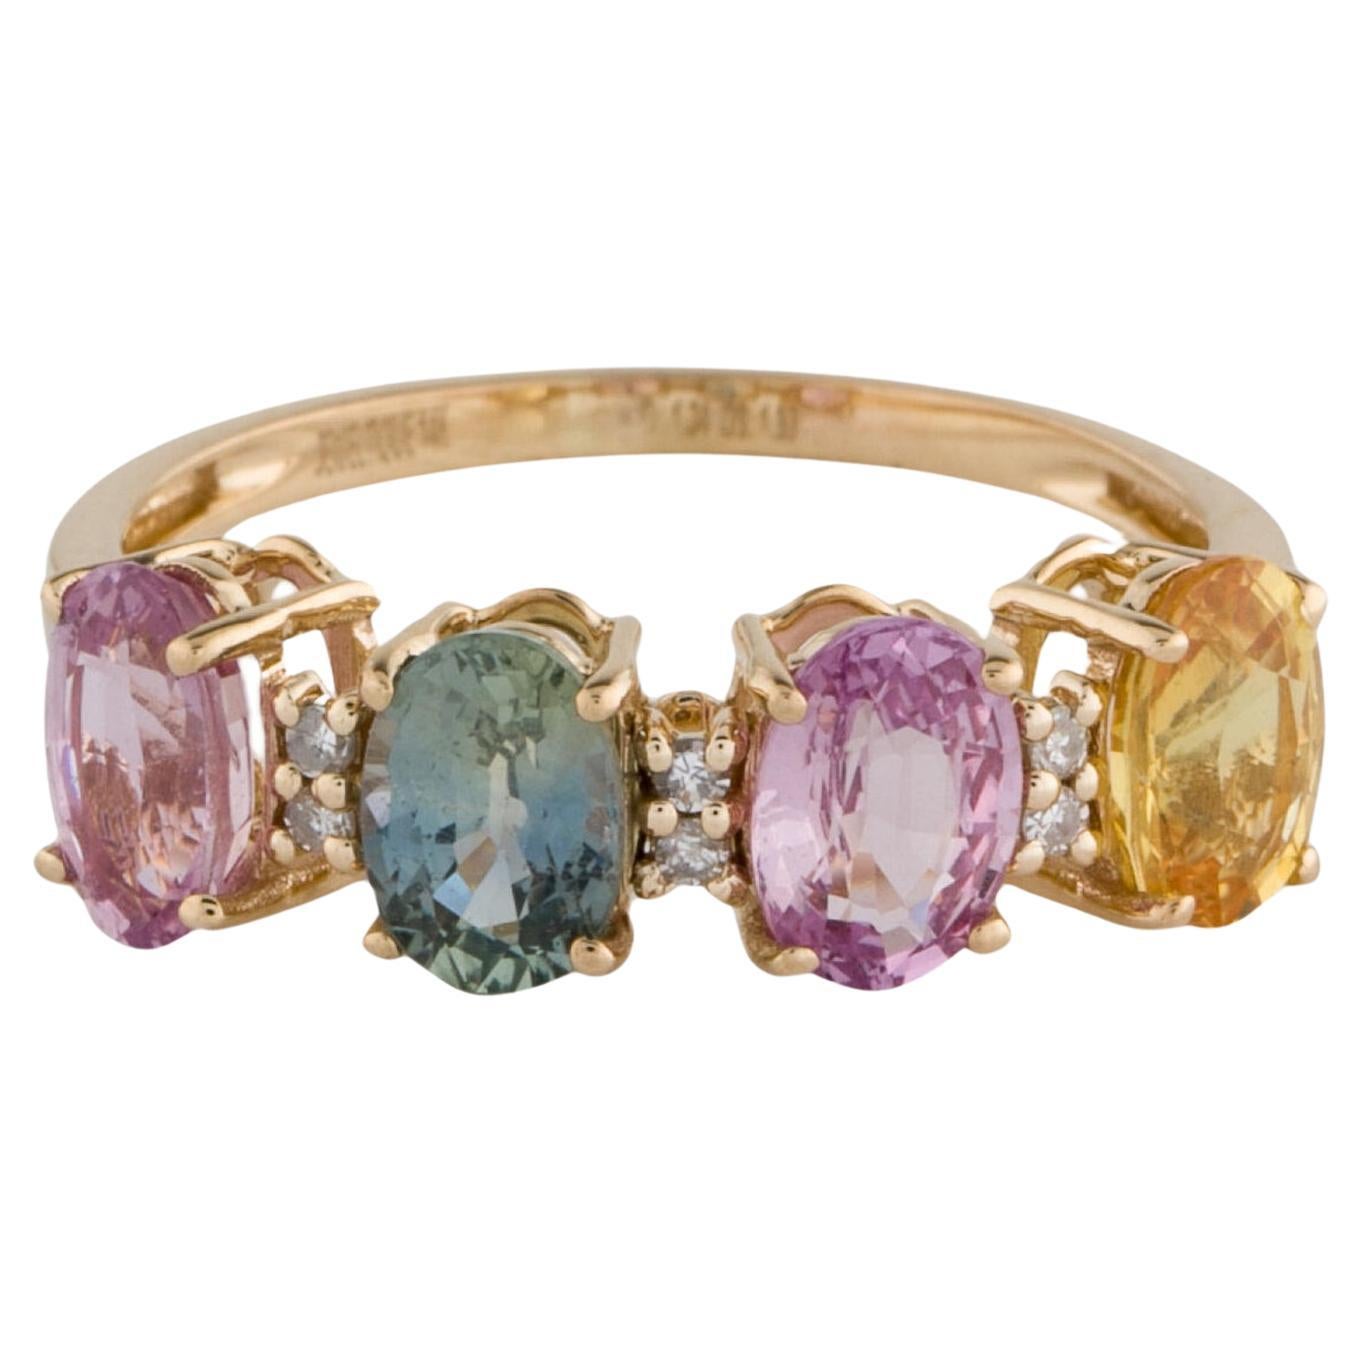 Exquisite 14K Sapphire & Diamond Ring - Size 7 - Elegant Statement Jewelry